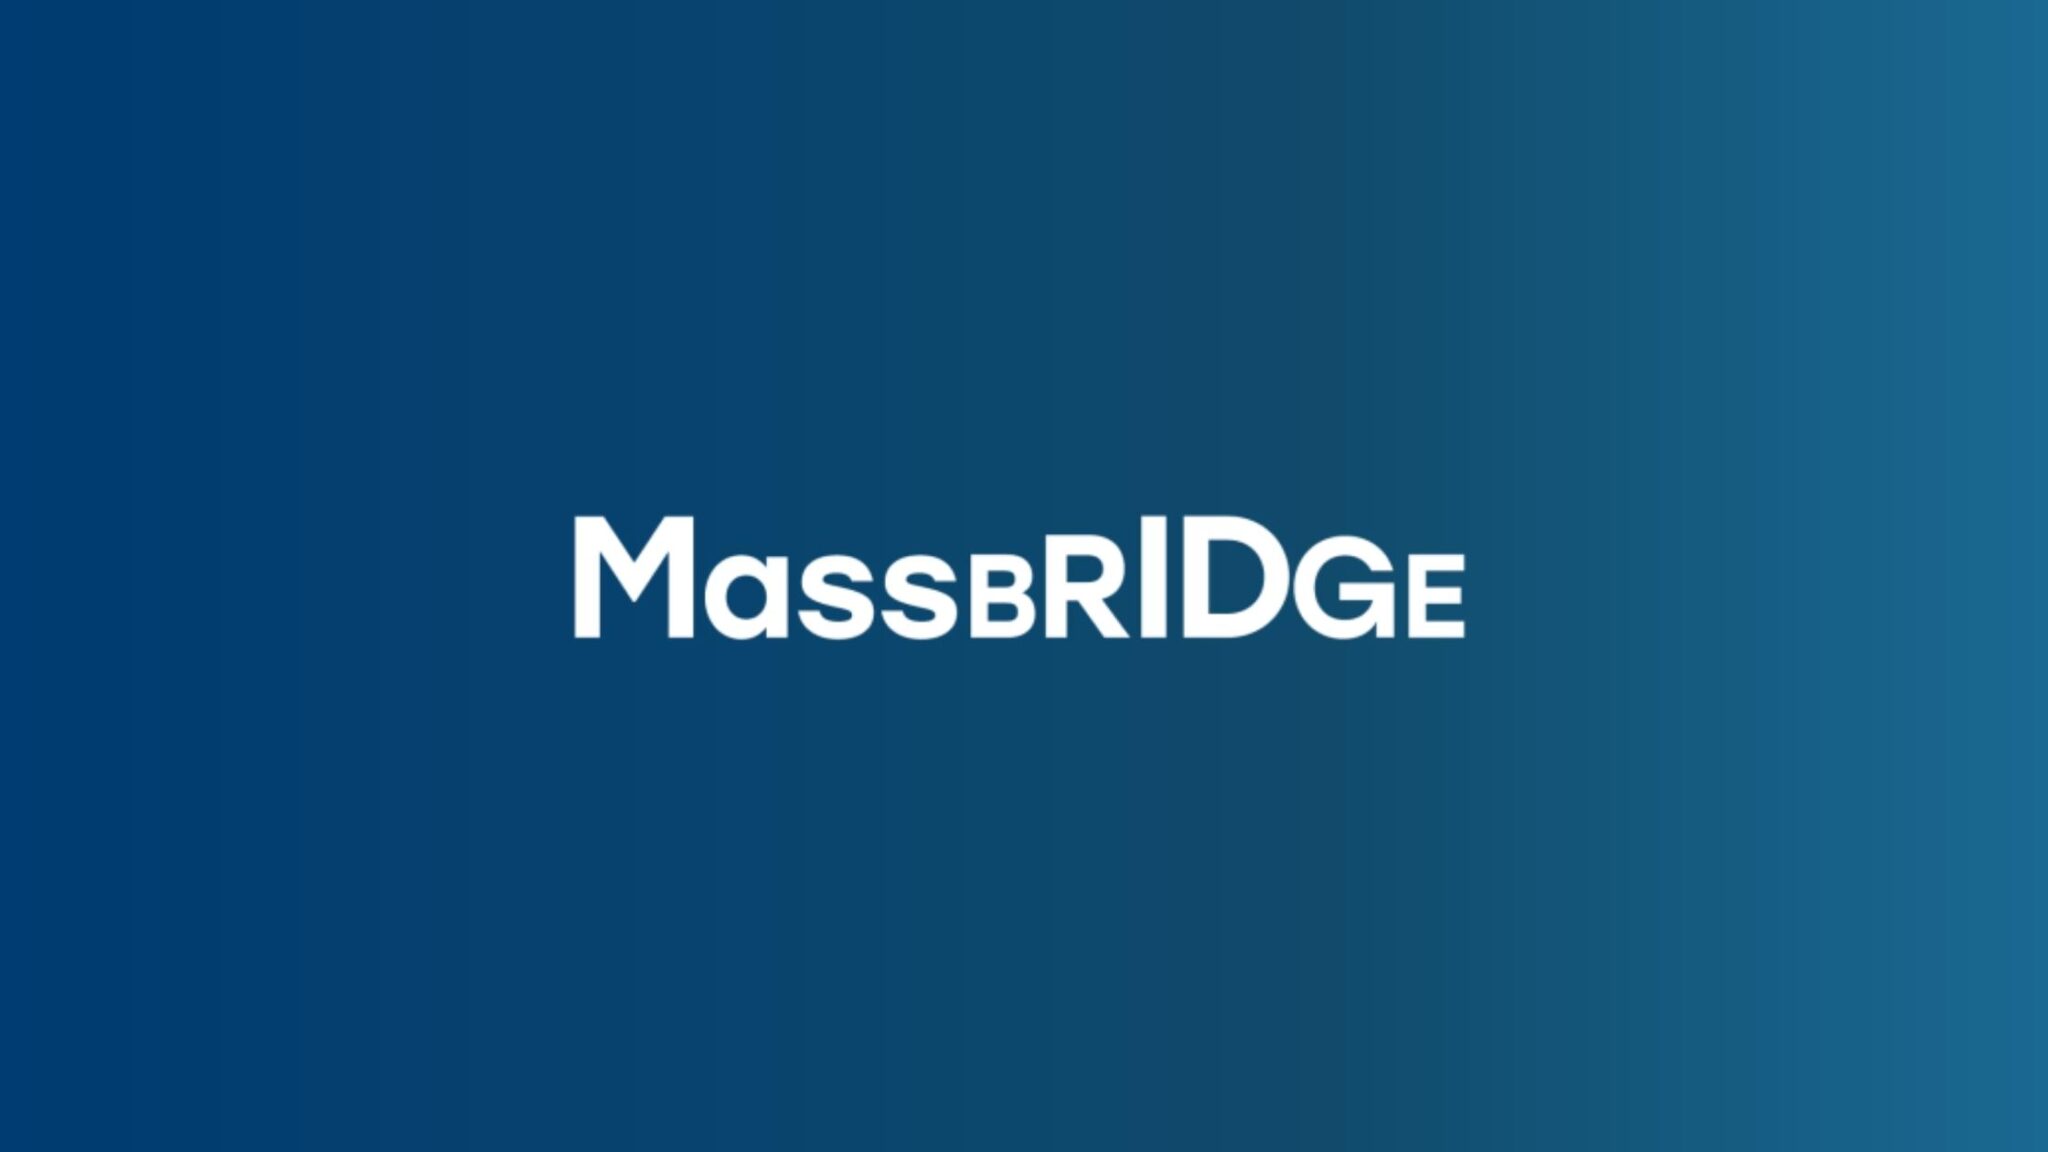 3MF in Education – Meet the MIT MassBridge Project Folks!